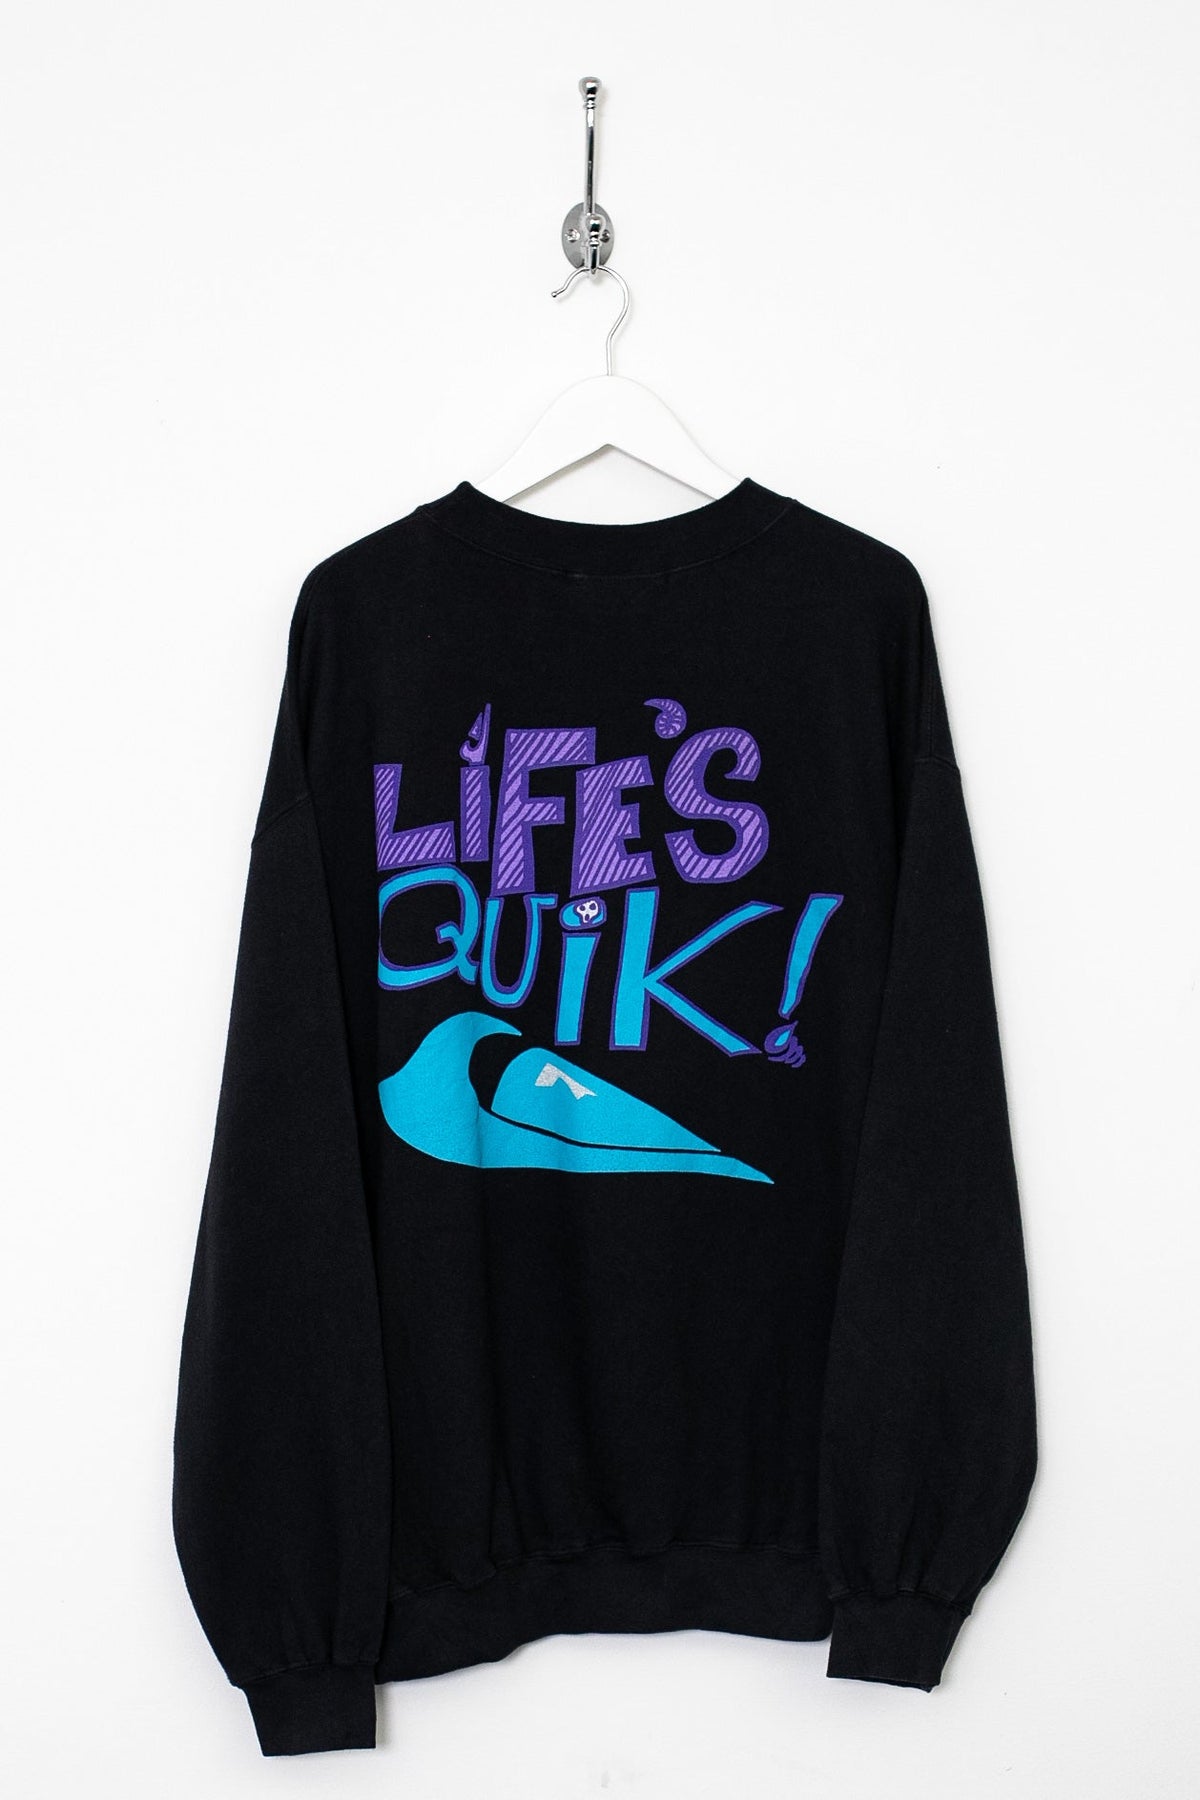 90s Quicksilver Sweatshirt (L)